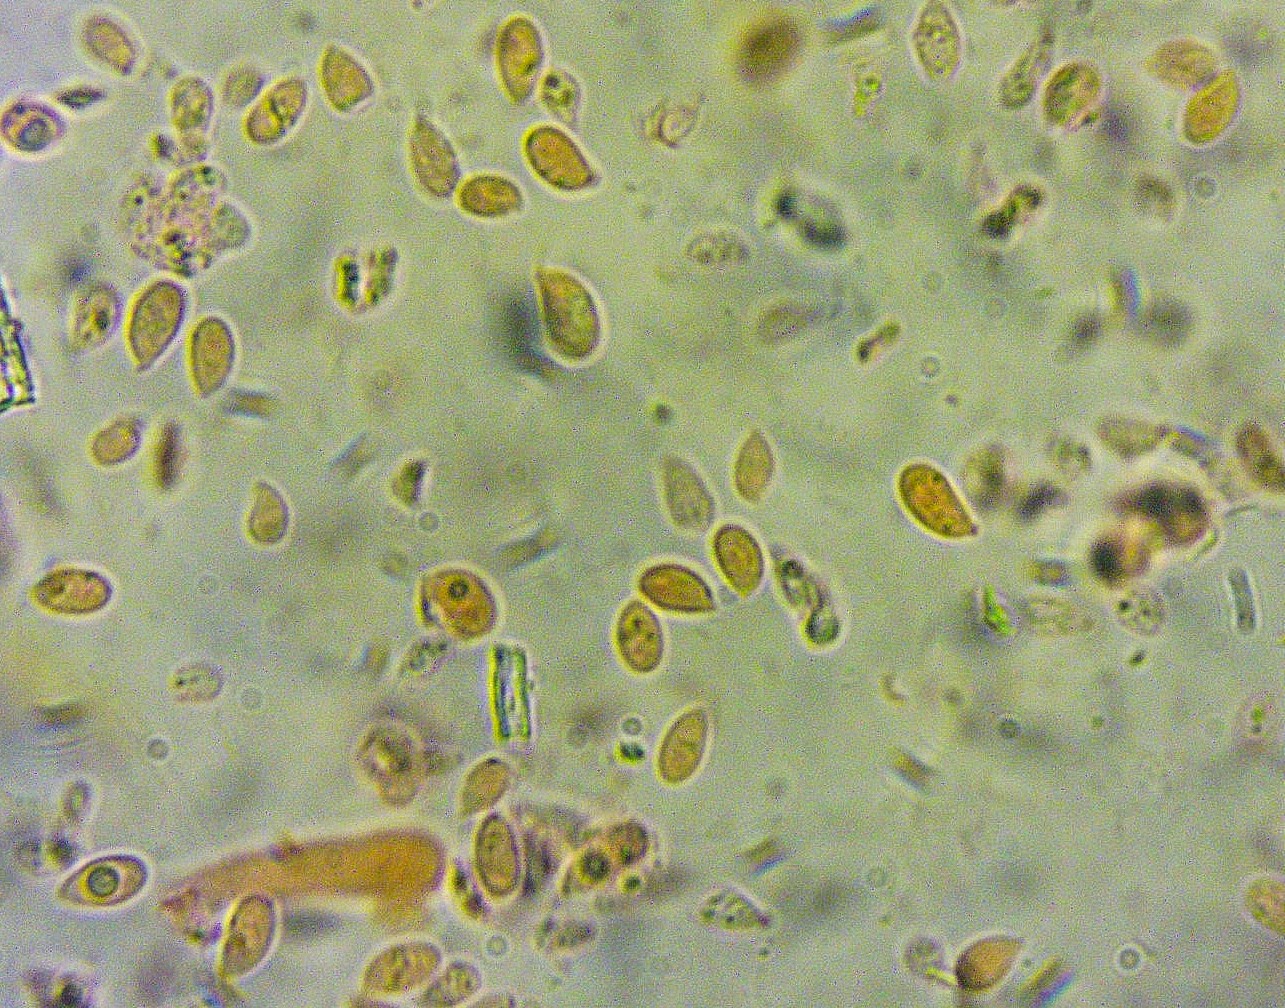 Hydropus pseudotenax 17 Sporen Kongo NH3 Ammoniak tot Apikulus Mycena Wasserfuss PSV DGfM Feldmykologe